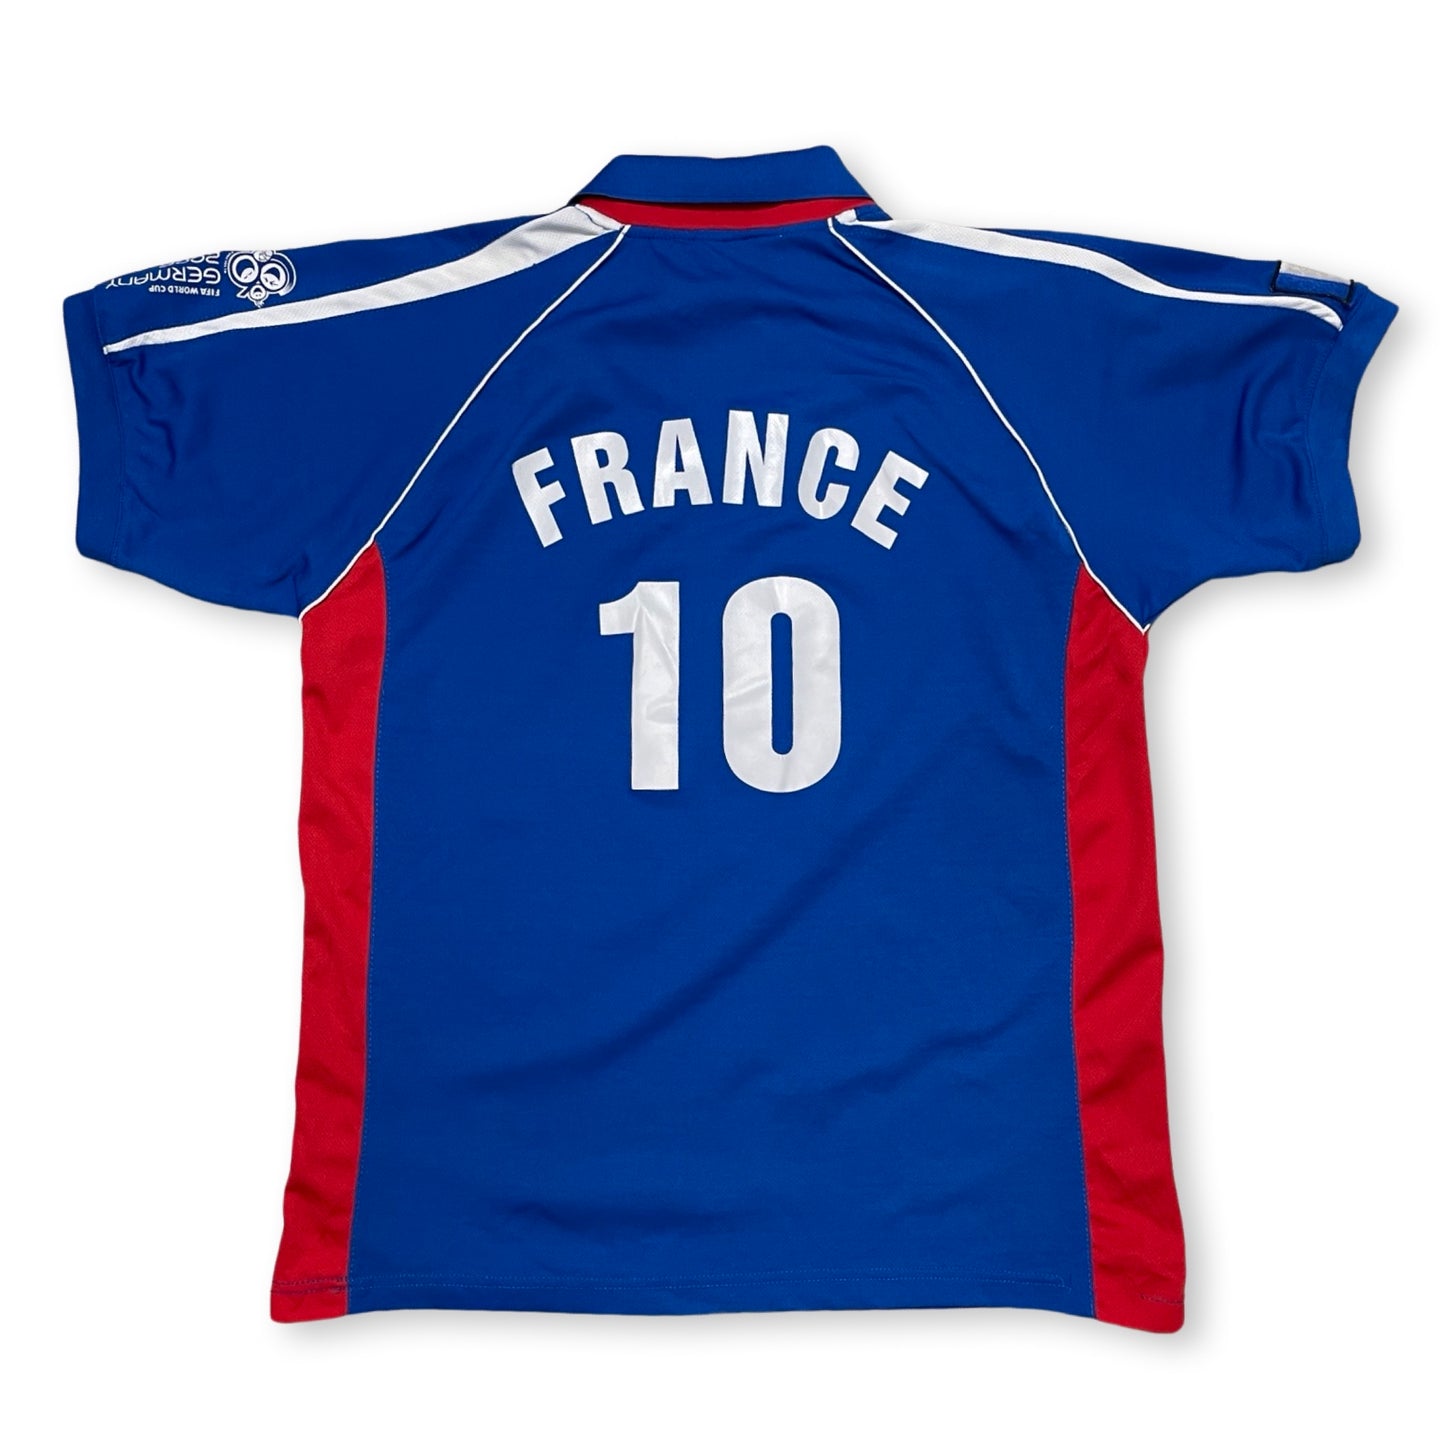 France Footbal Shirt (Large)